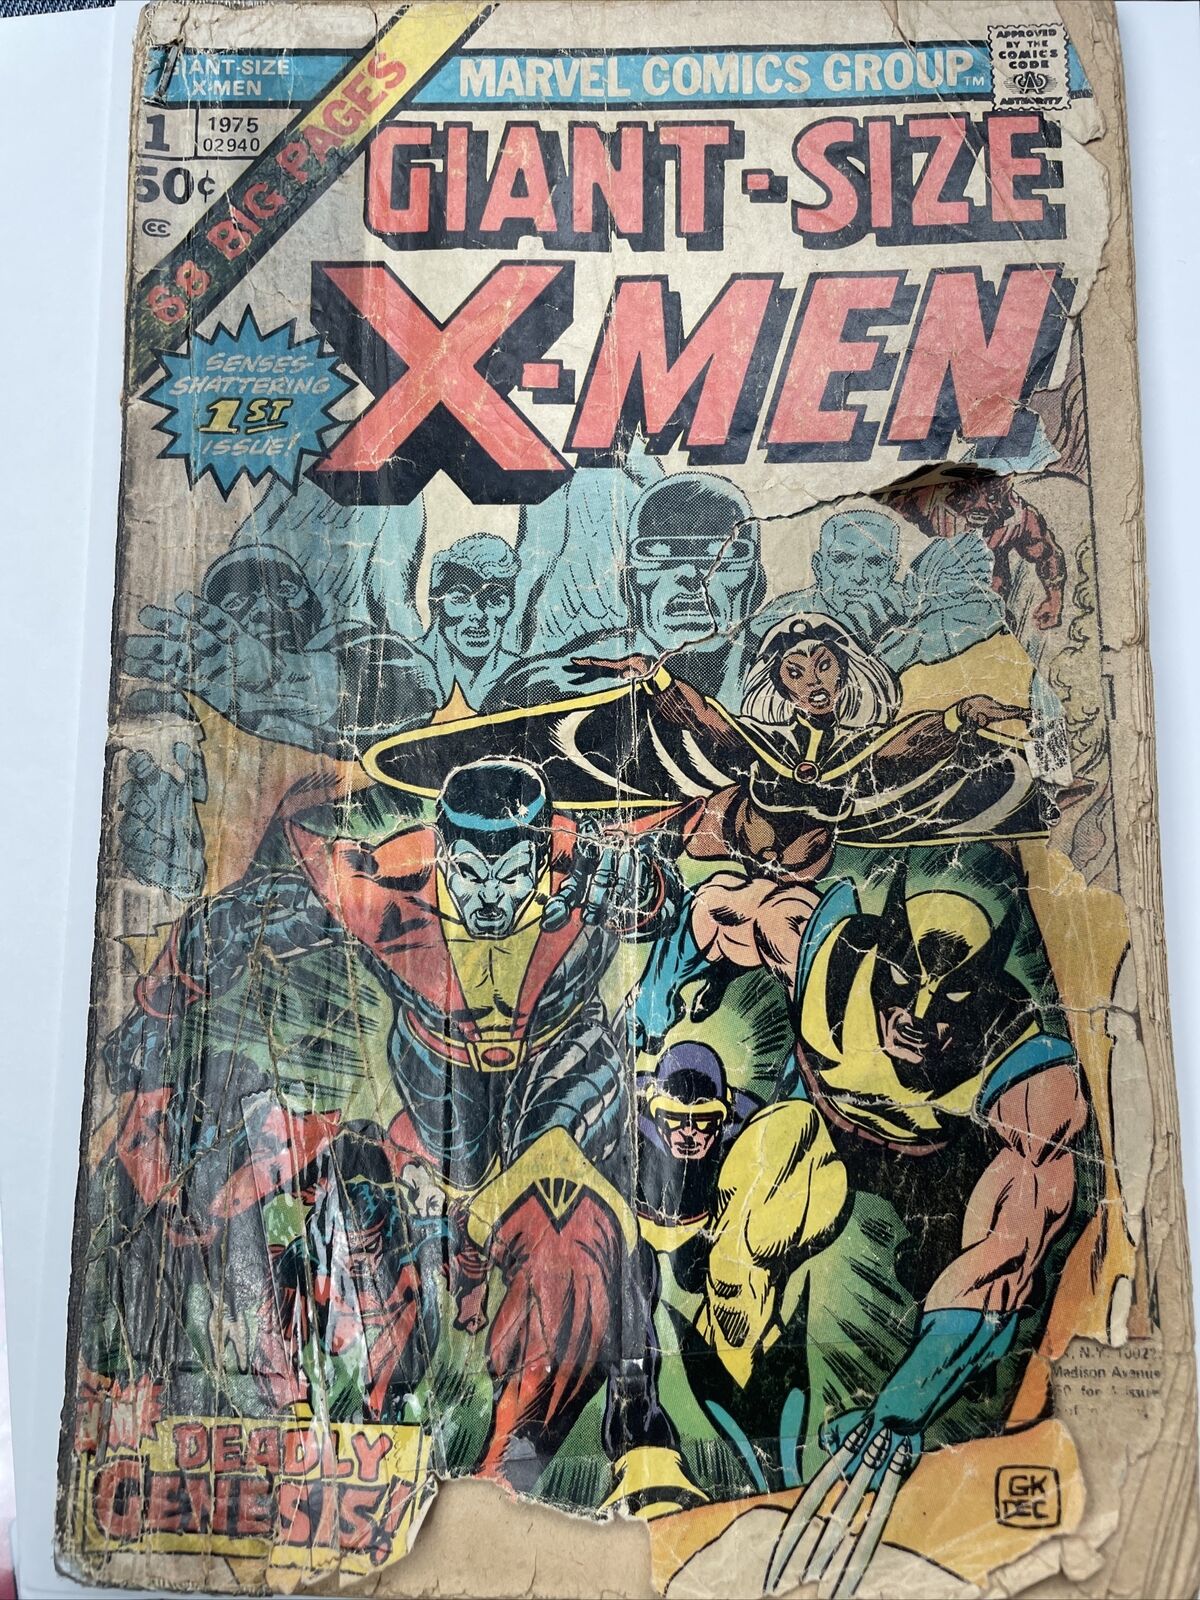 Giant-Size X-Men #1 (Marvel Comics May 1975)